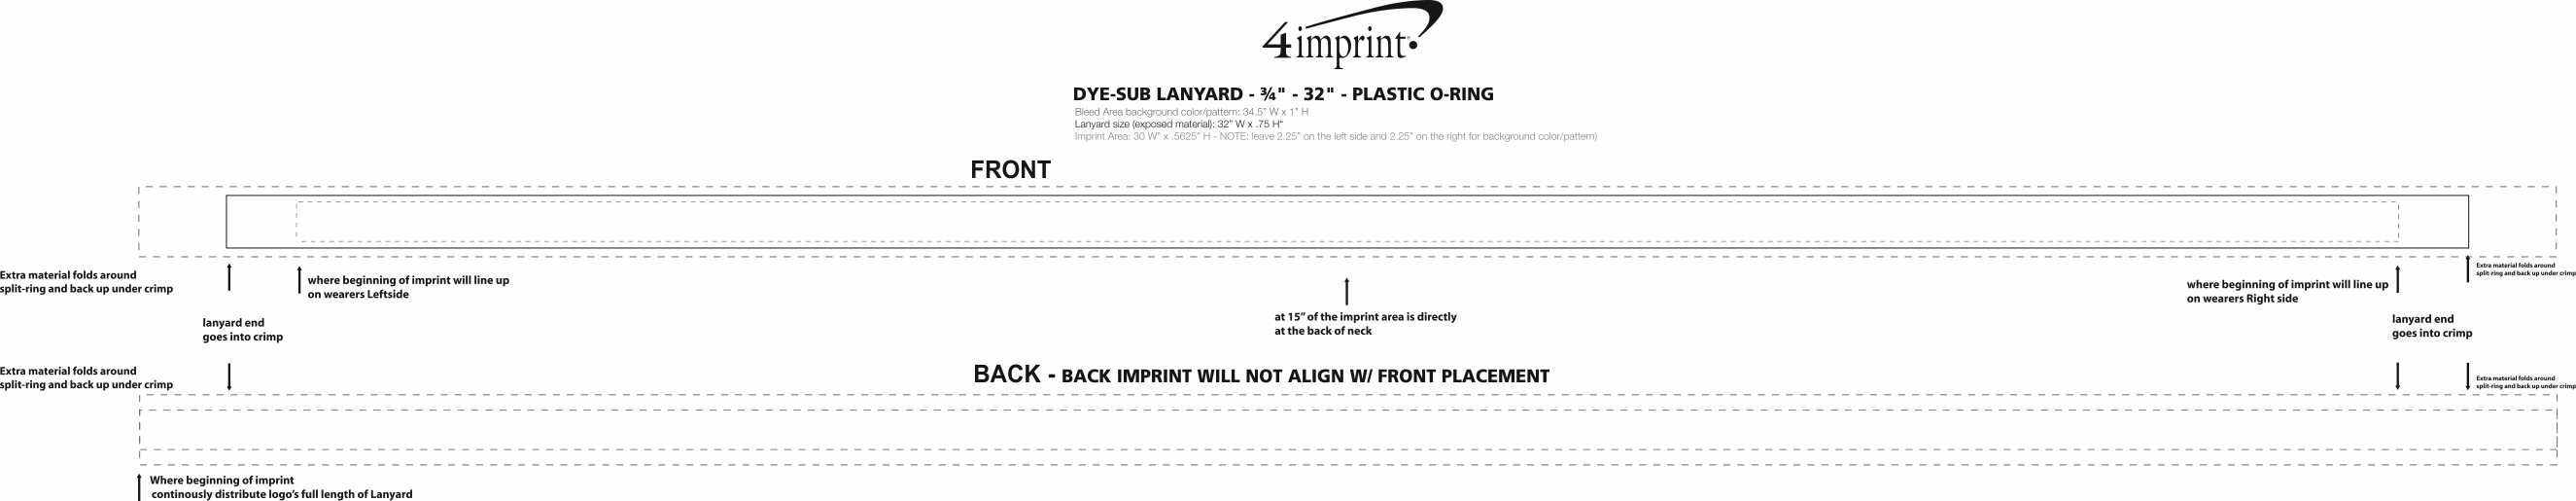 Imprint Area of Dye-Sub Lanyard - 3/4" - 32" - Plastic O-Ring - 24 hr